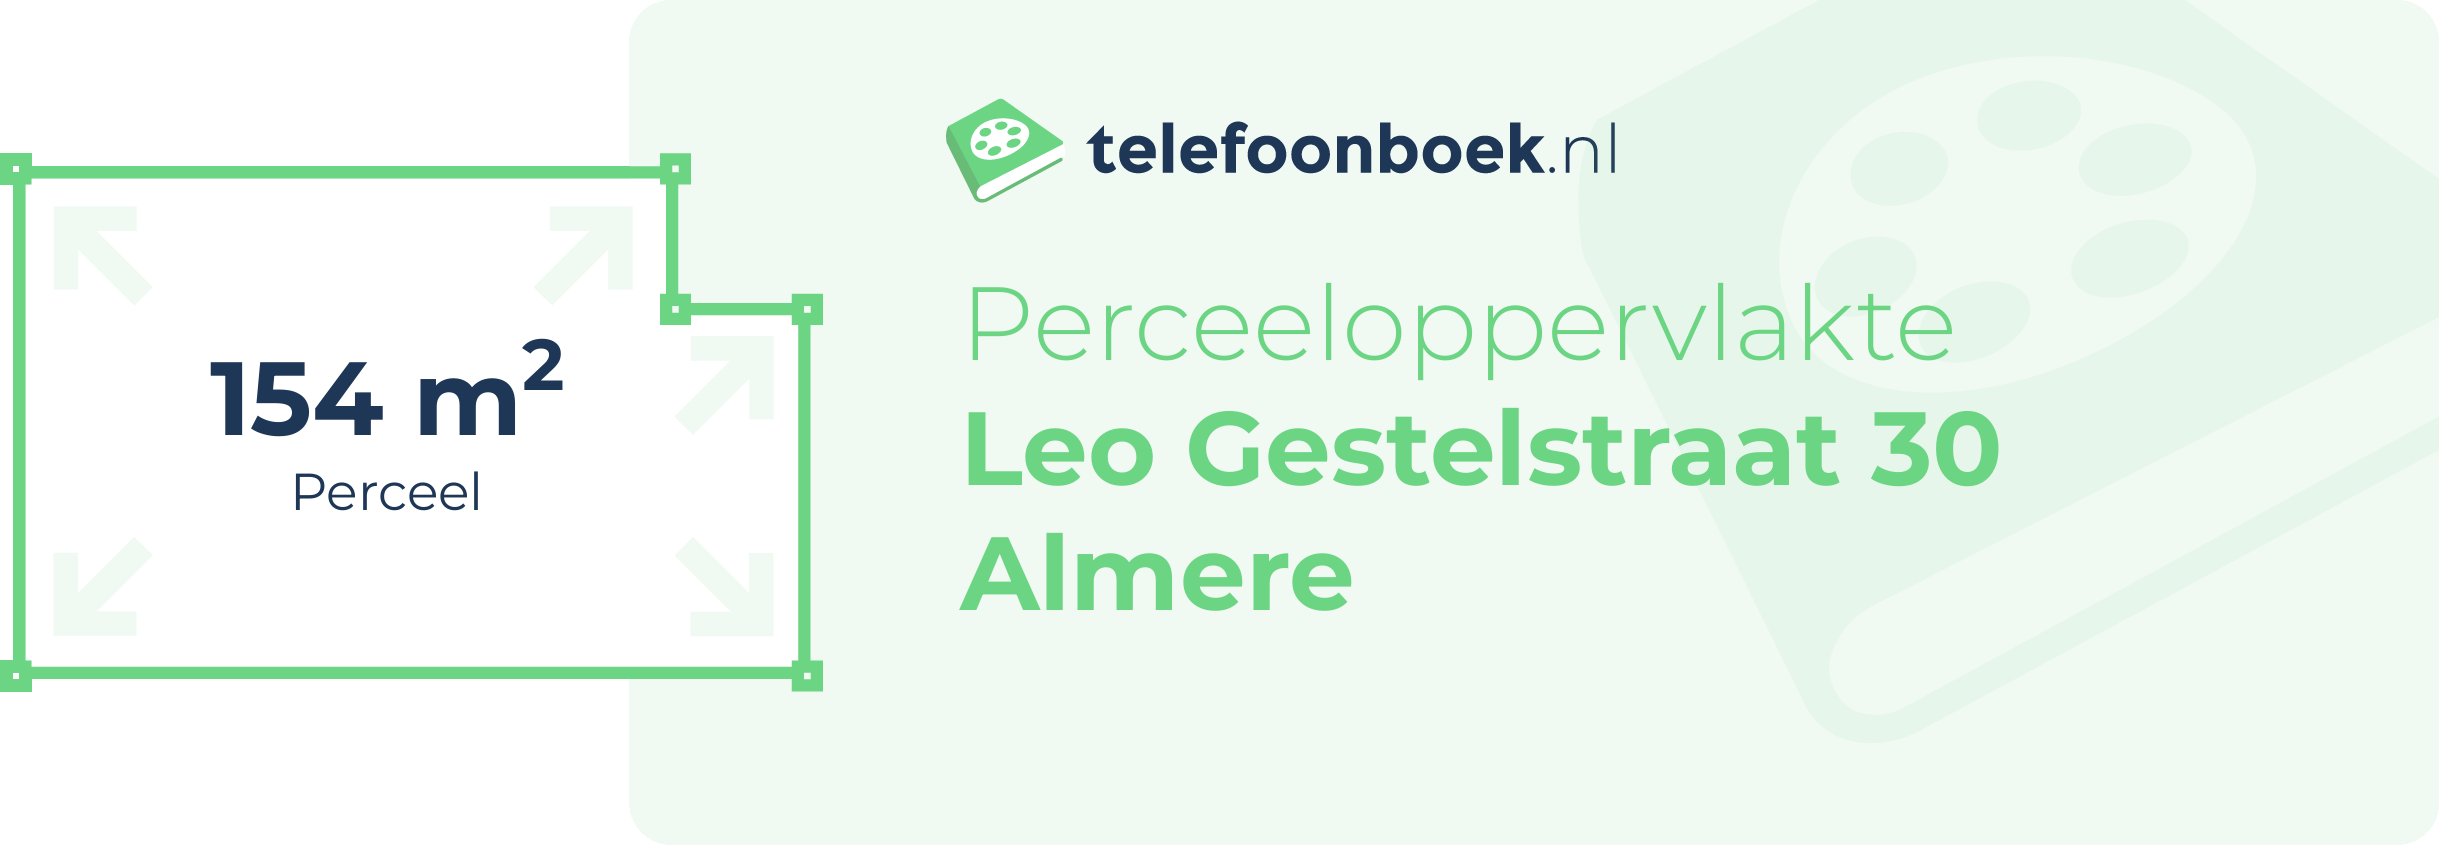 Perceeloppervlakte Leo Gestelstraat 30 Almere